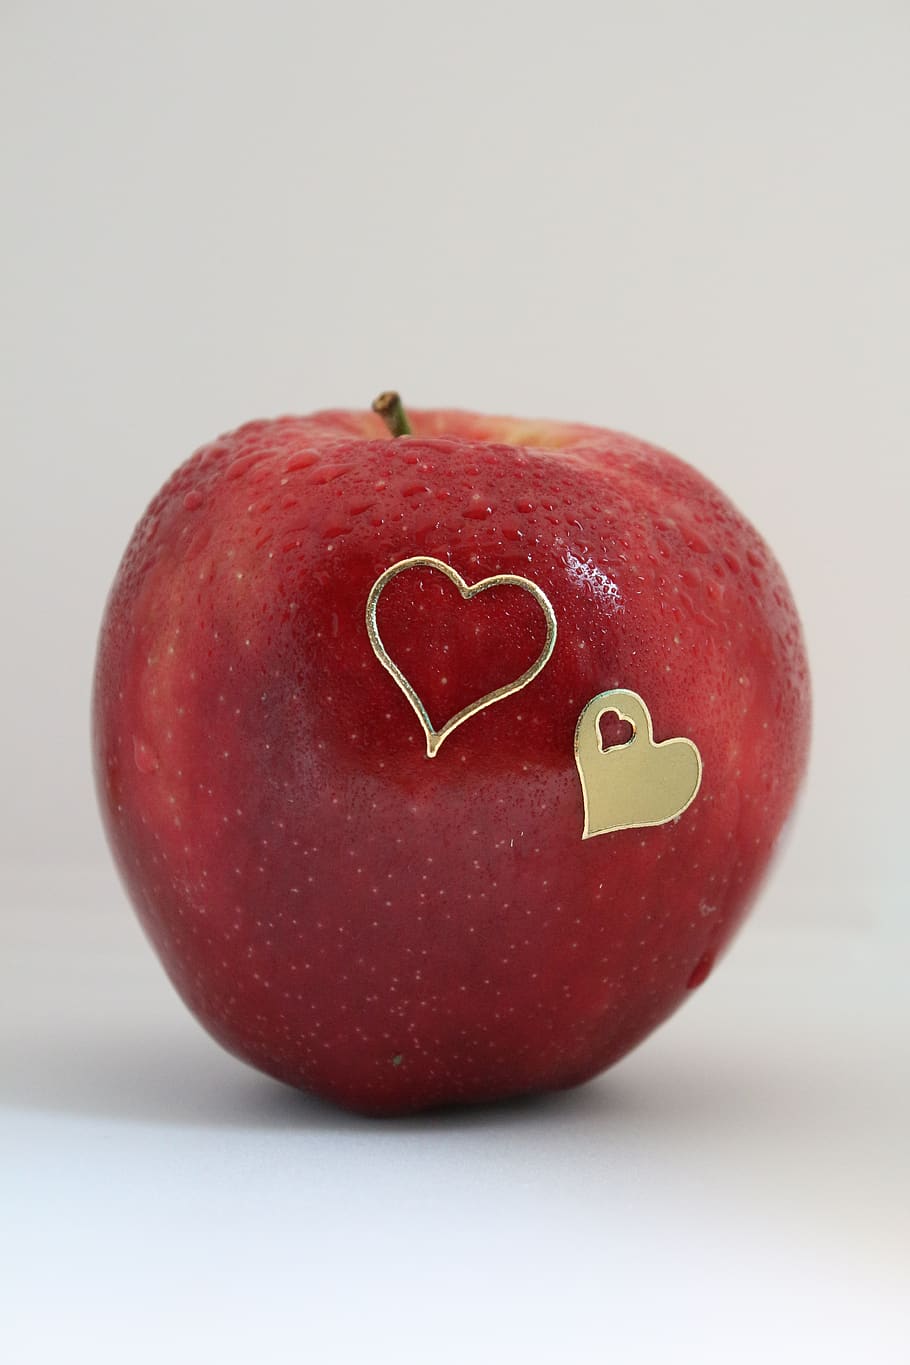 apple, heart, fruit, healthy, eat, health, love, vitamins, food, nutrition